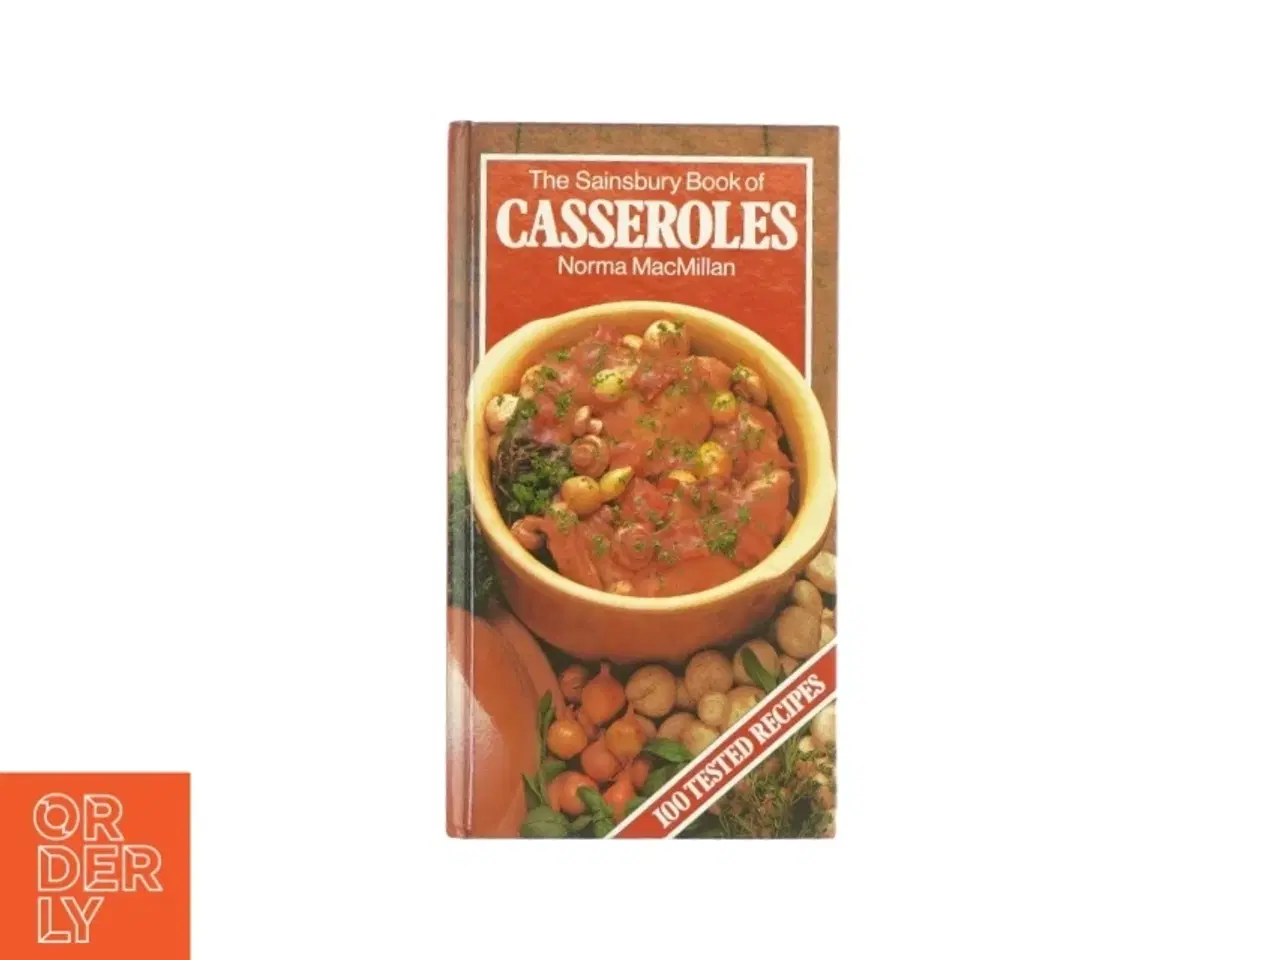 Billede 1 - The Sainsbury book of casseroles af Norma MacMillan (Bog)